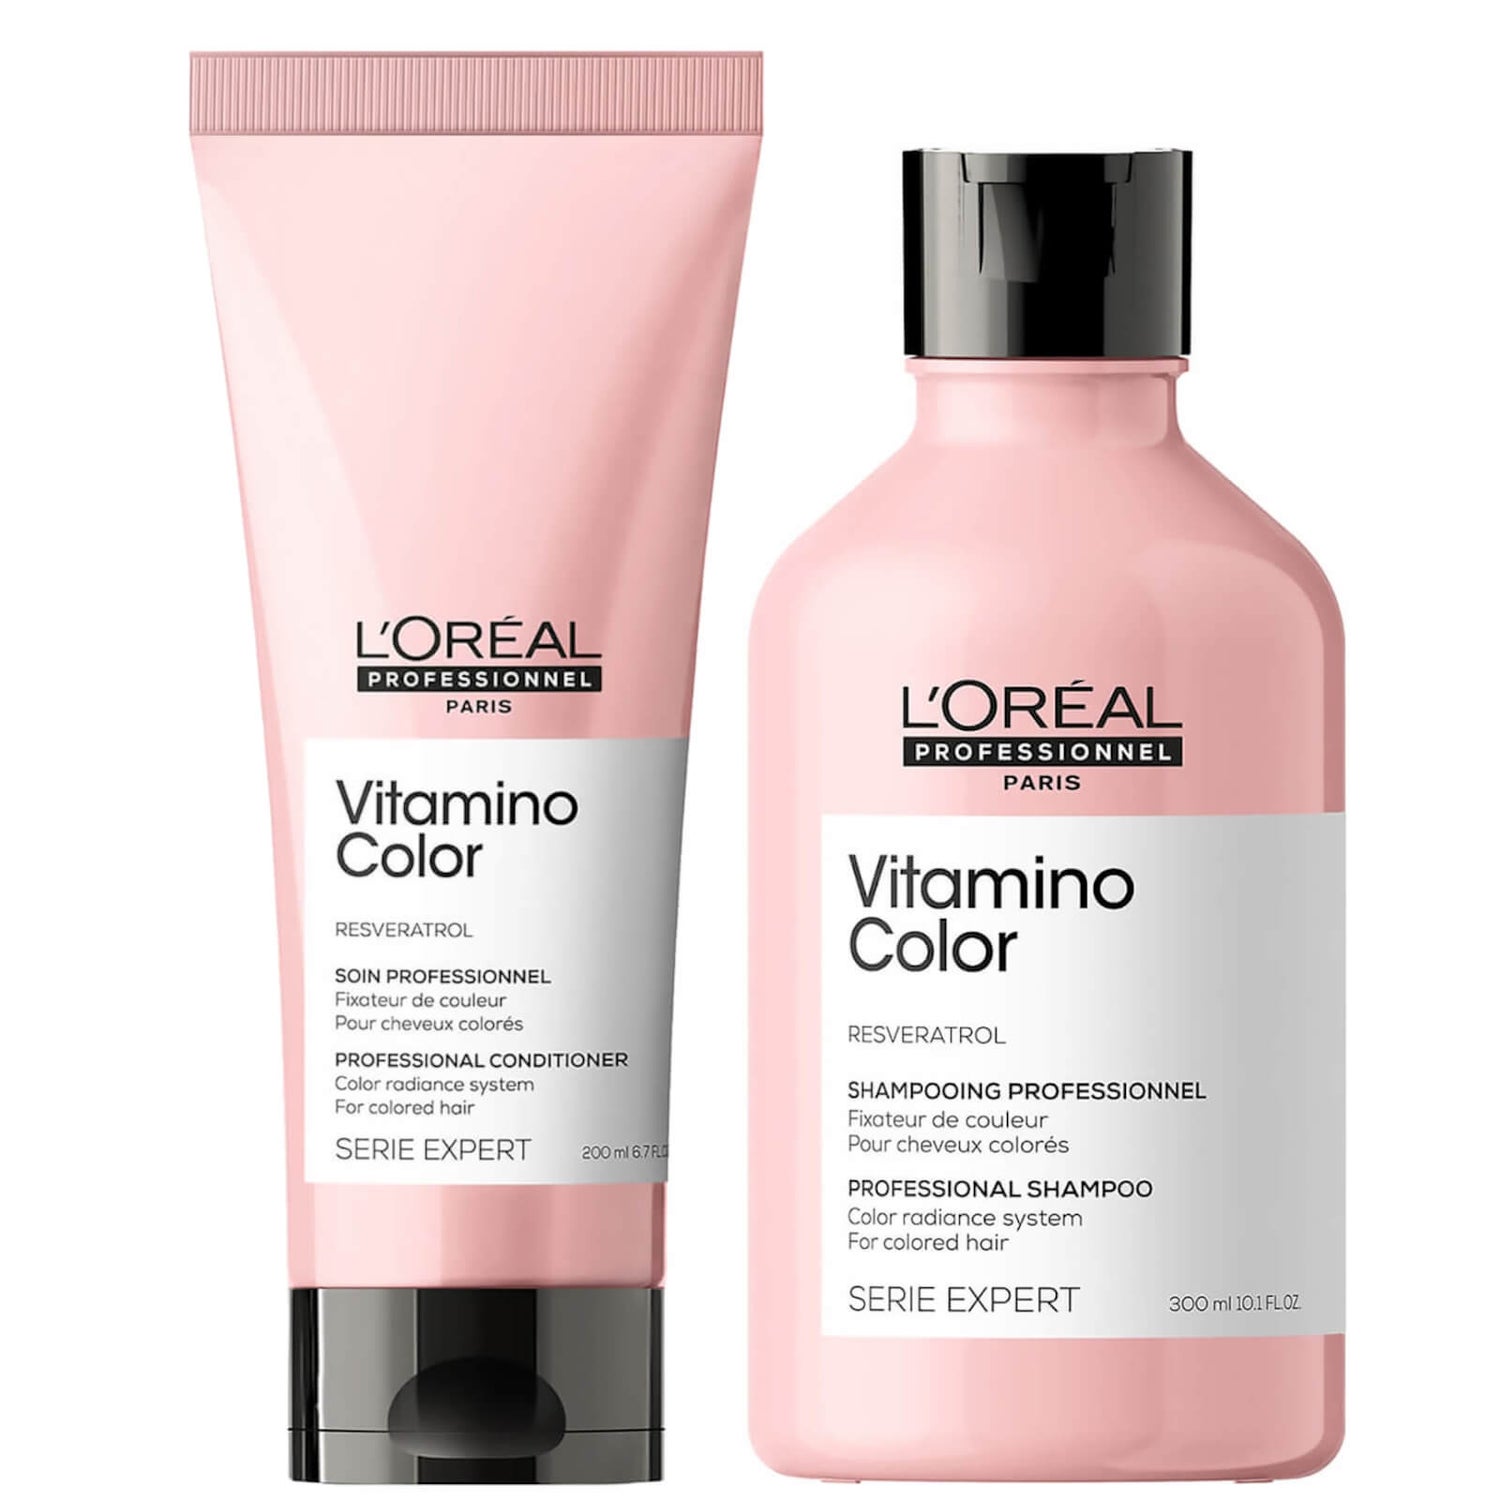 szampon loreal vitamino